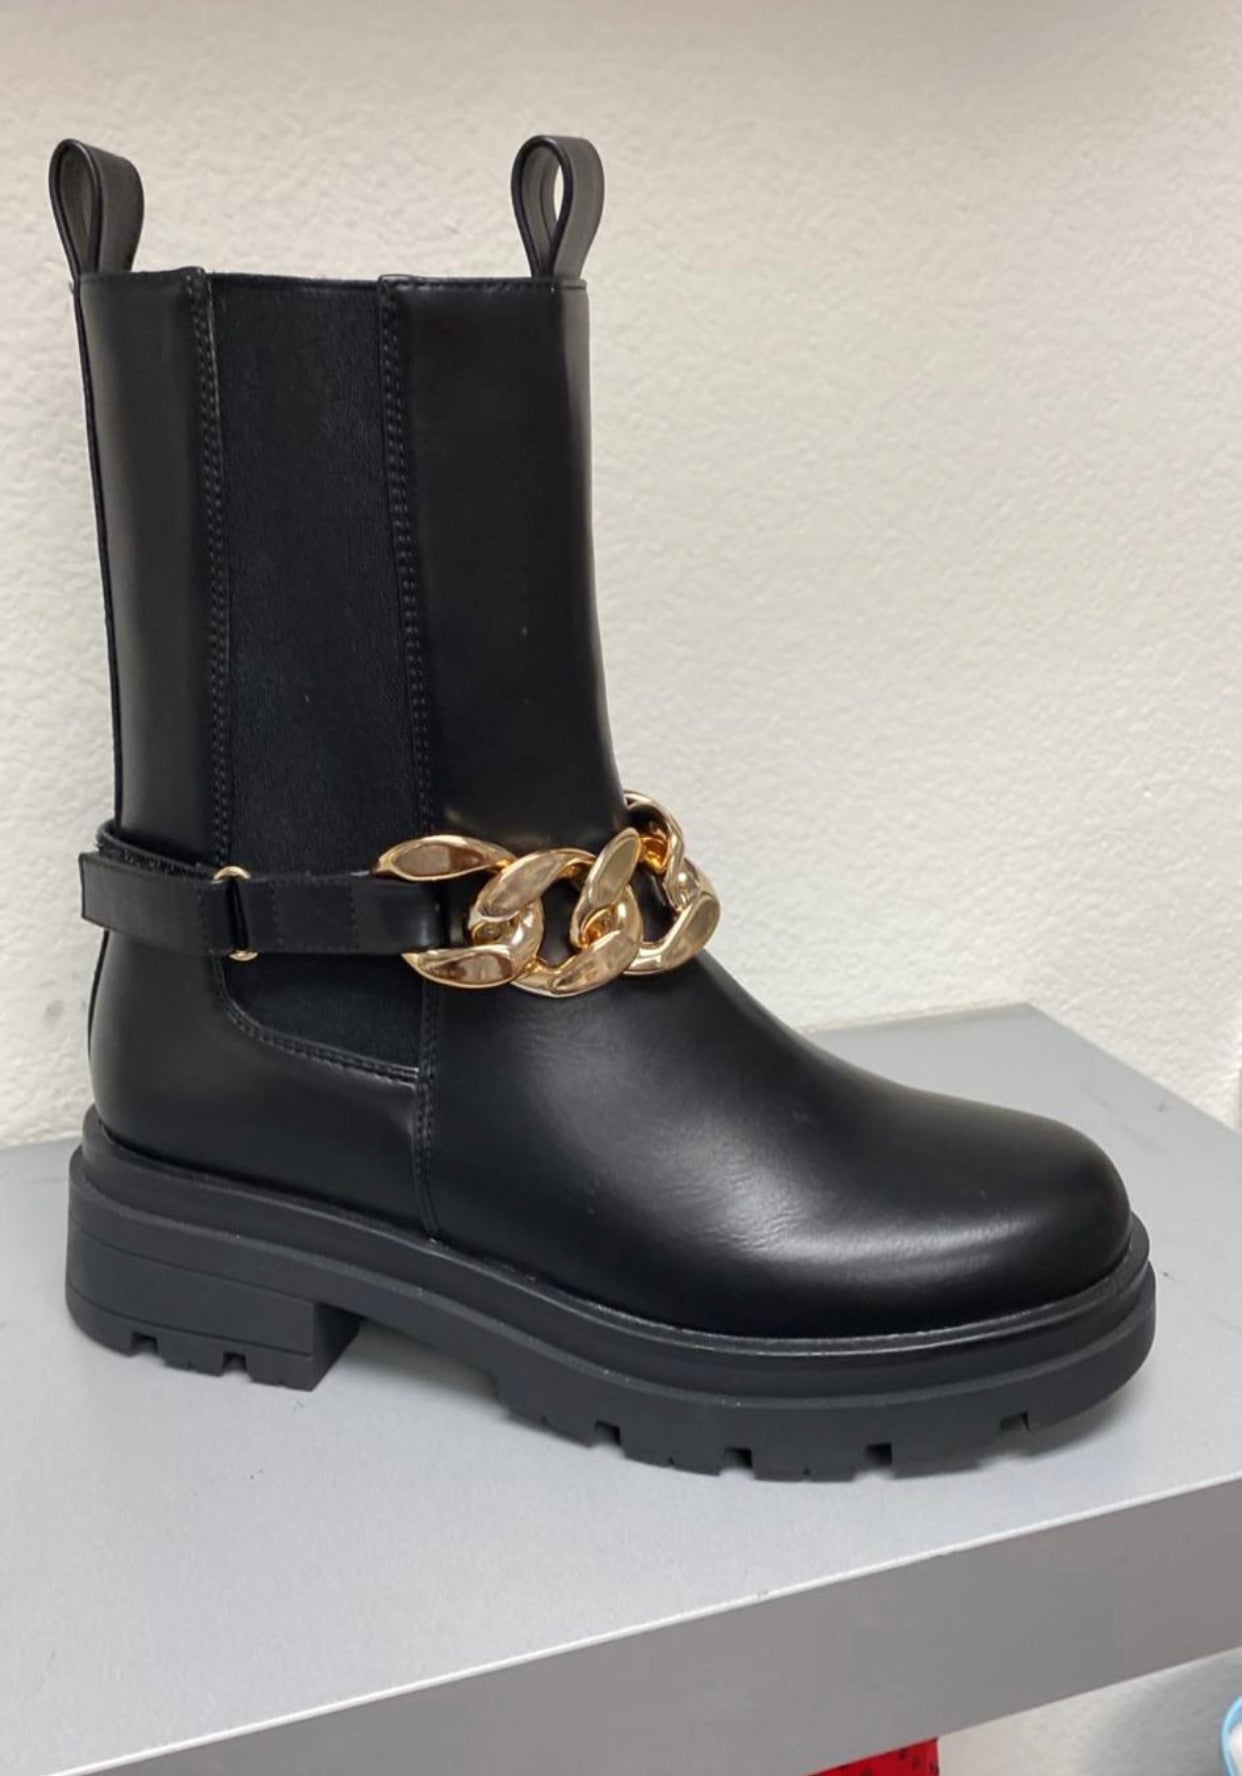 Rough girl chain boot